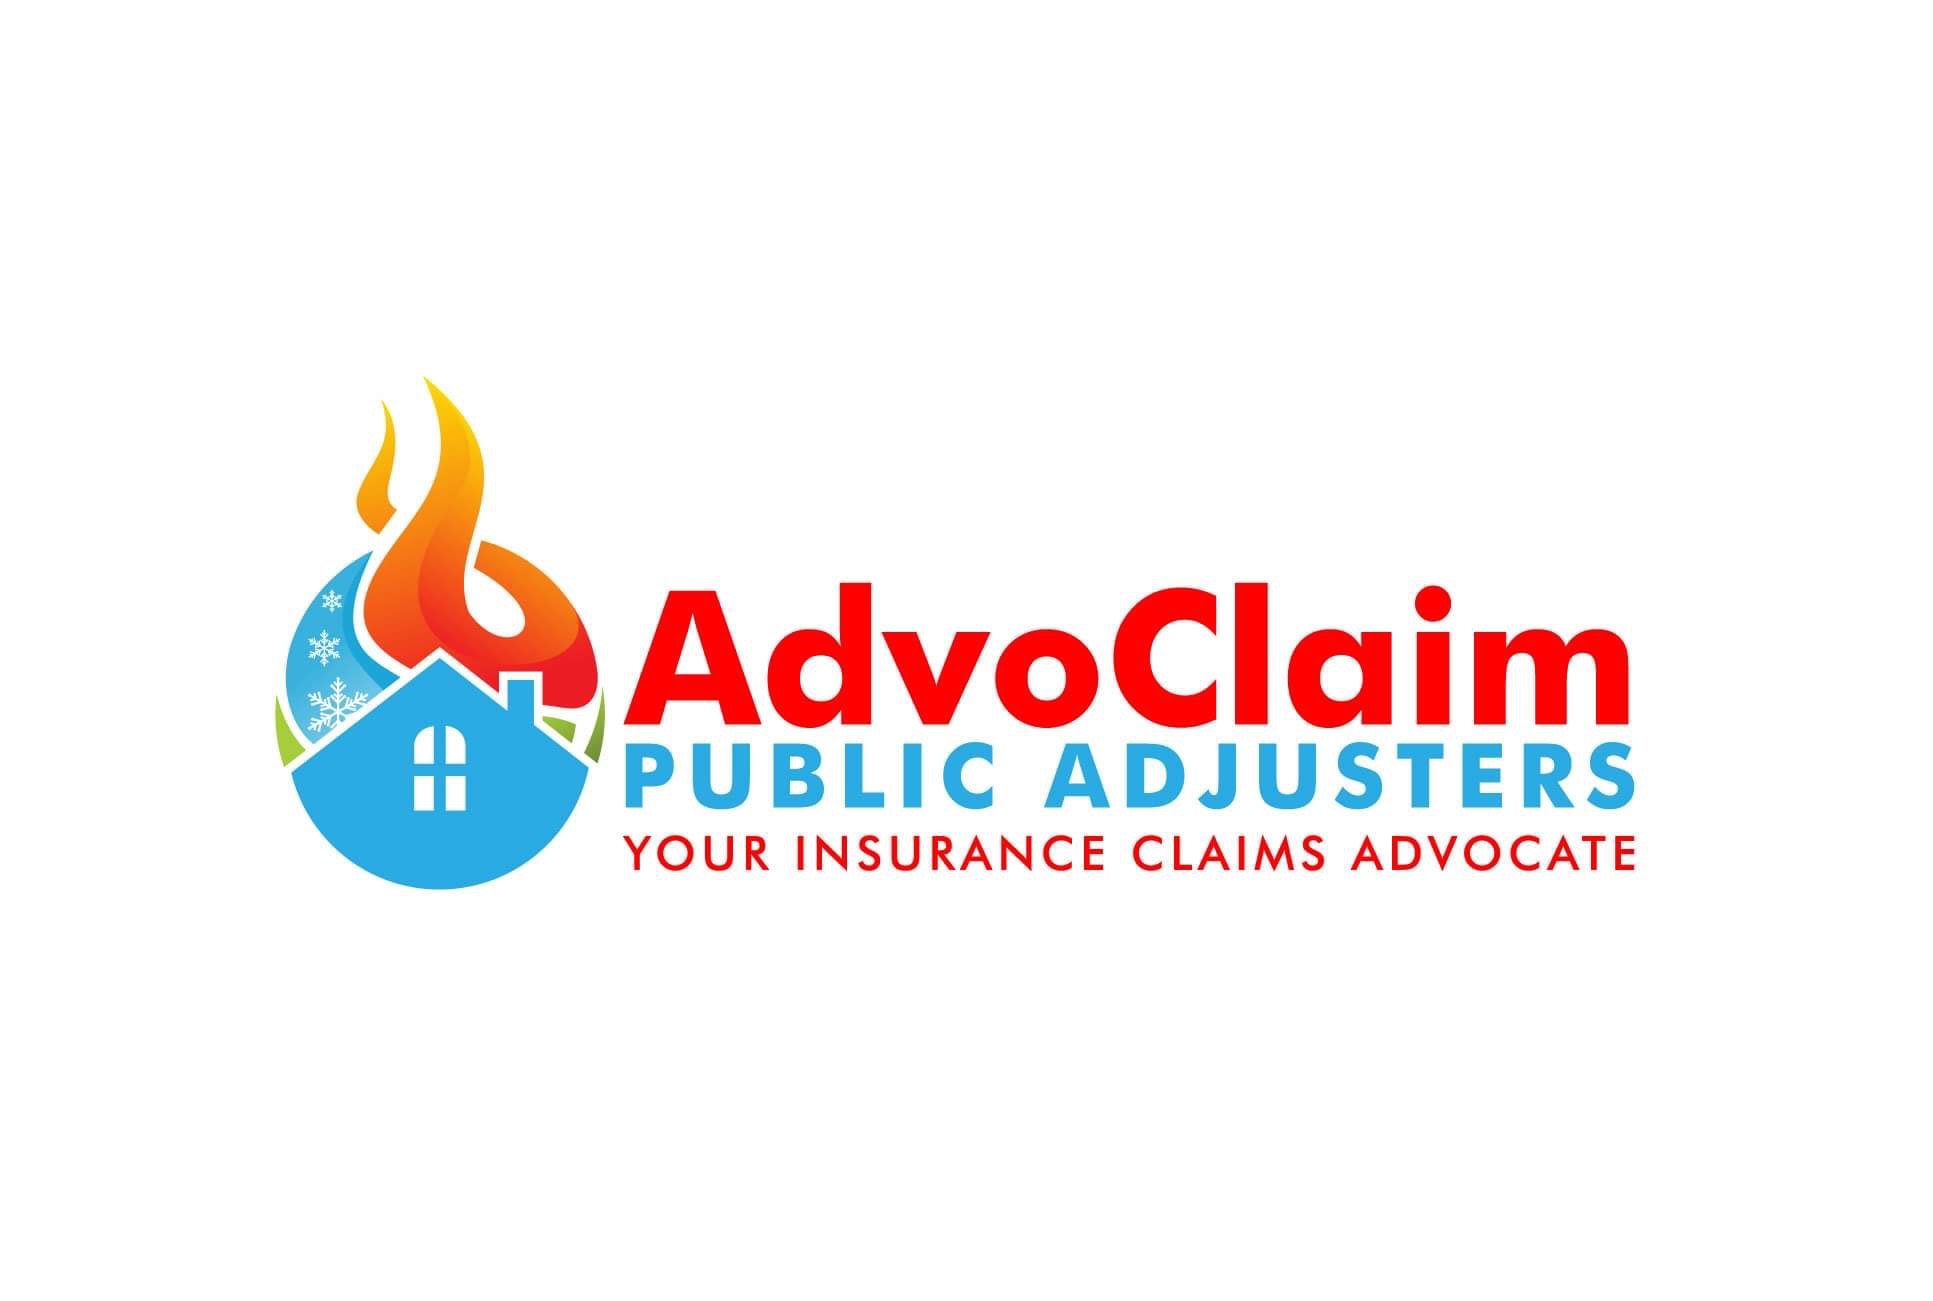 AdvoClaim Public Adjusters